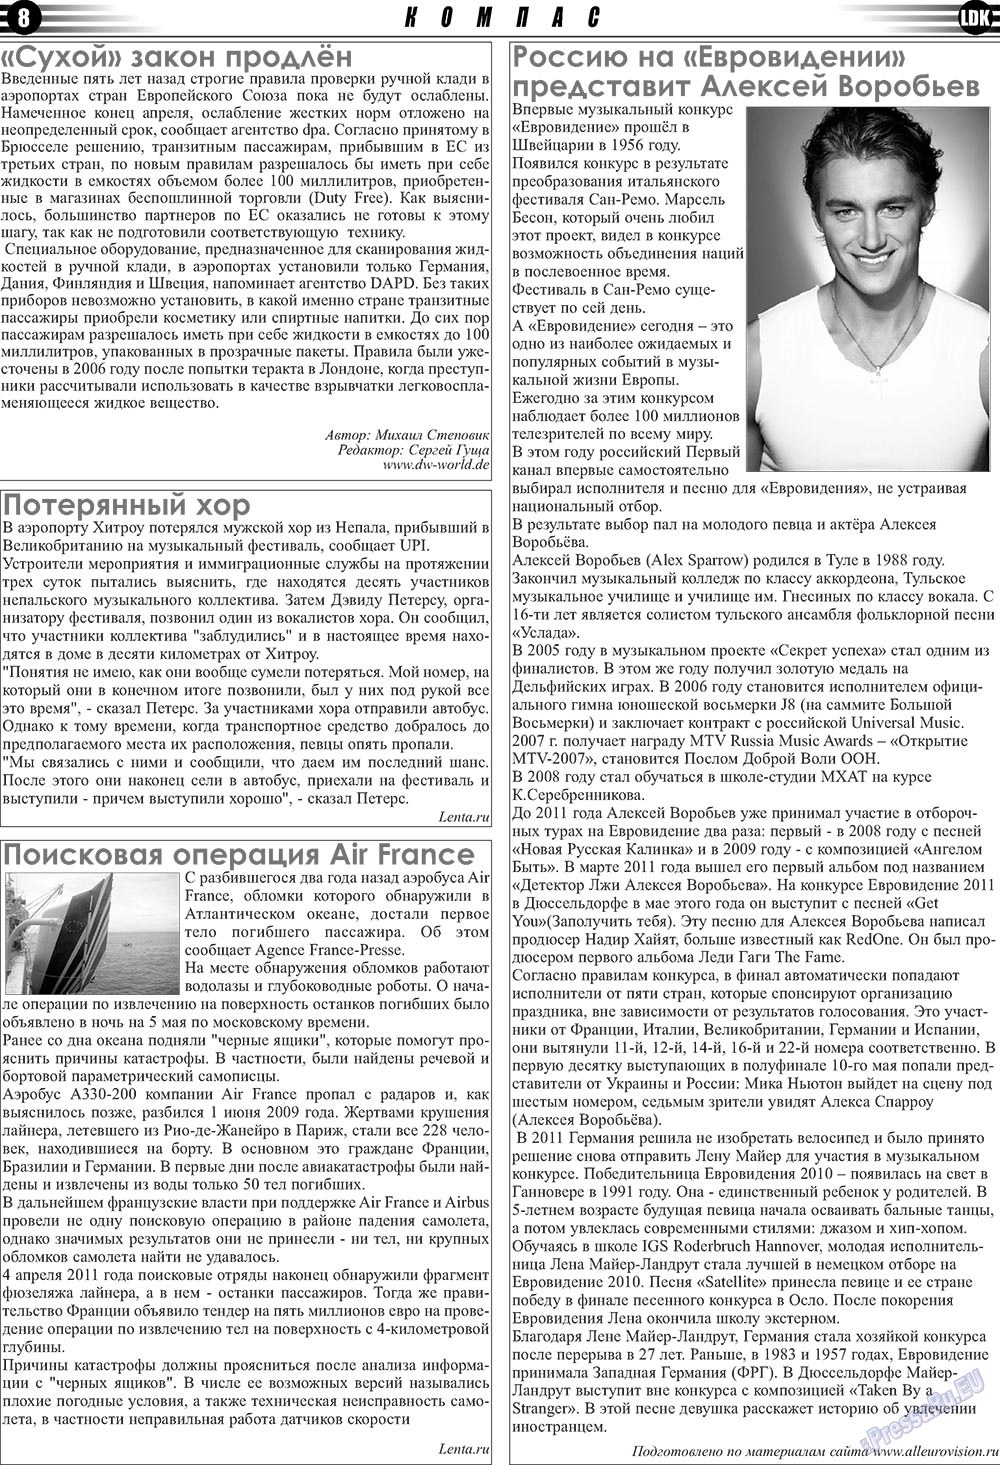 LDK по-русски, газета. 2011 №3 стр.8